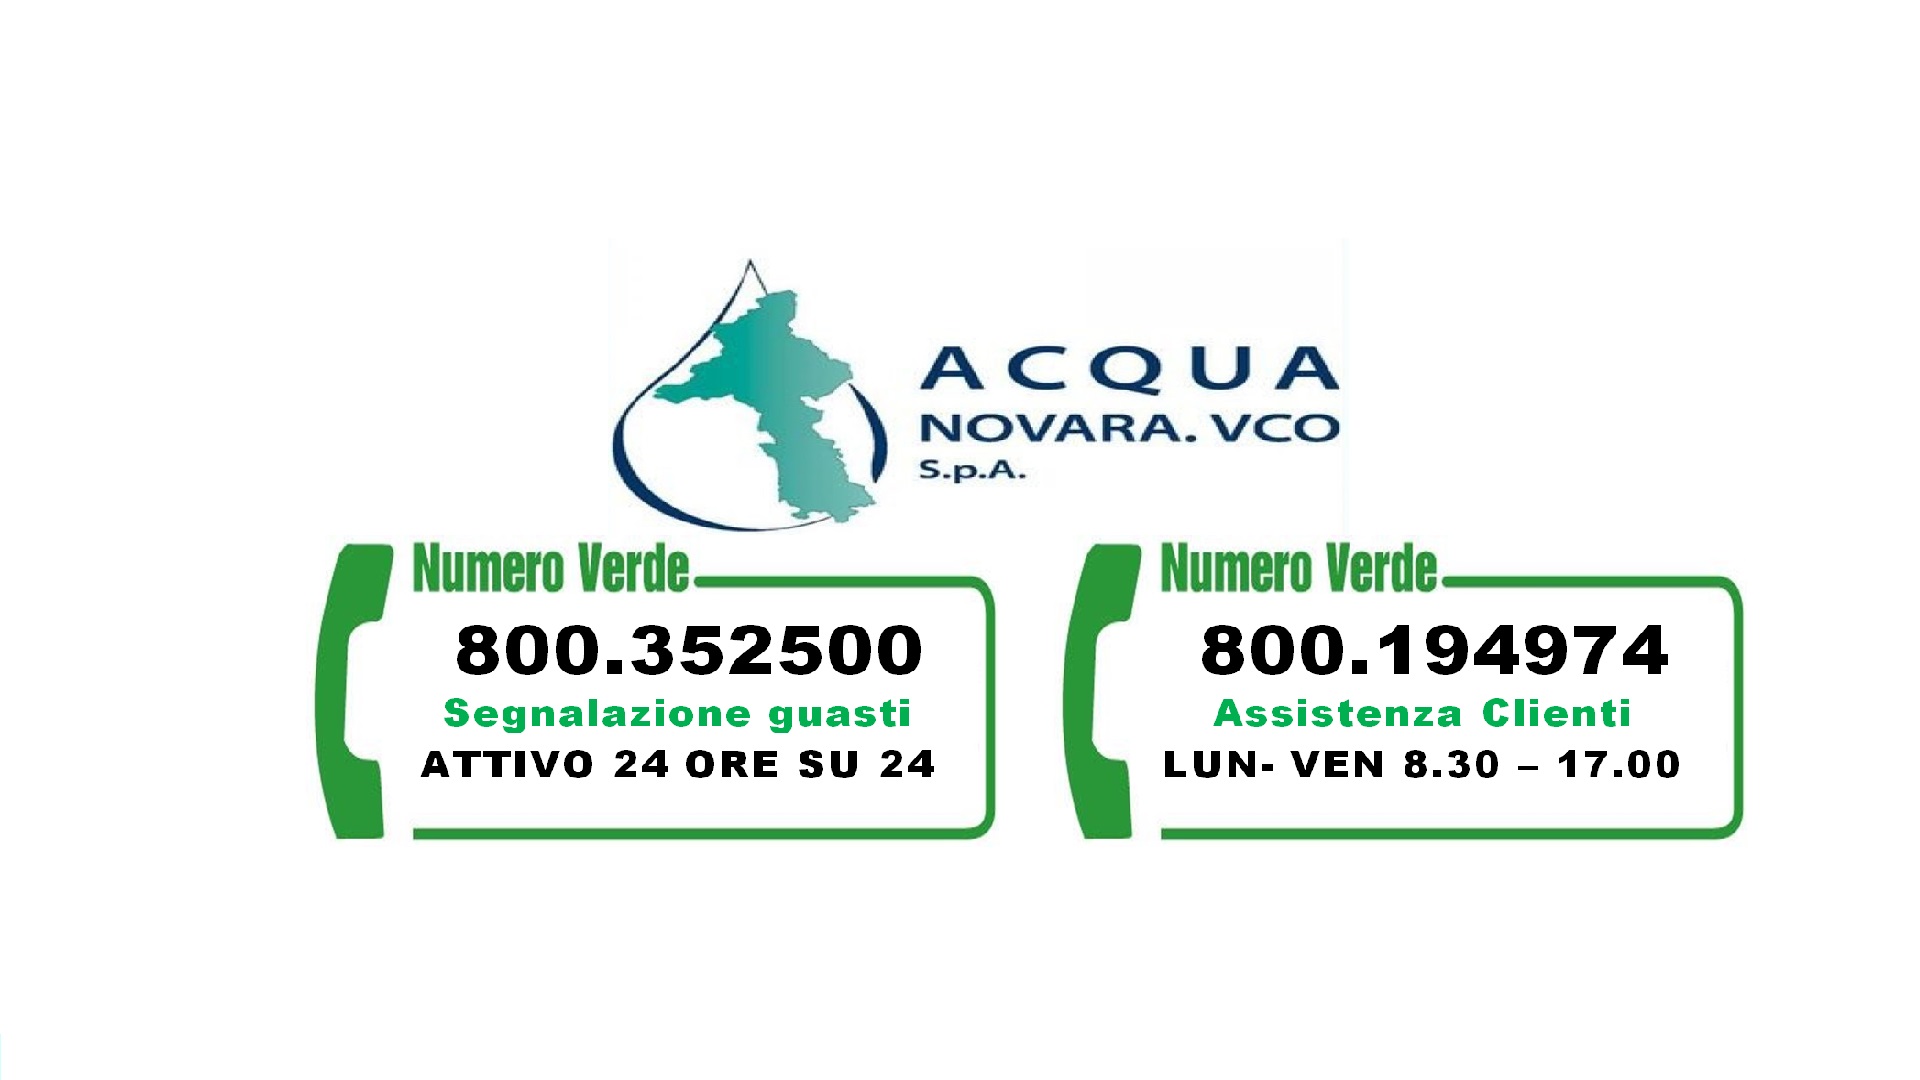 Logo e numeri verdi di Acqua Novara VCO